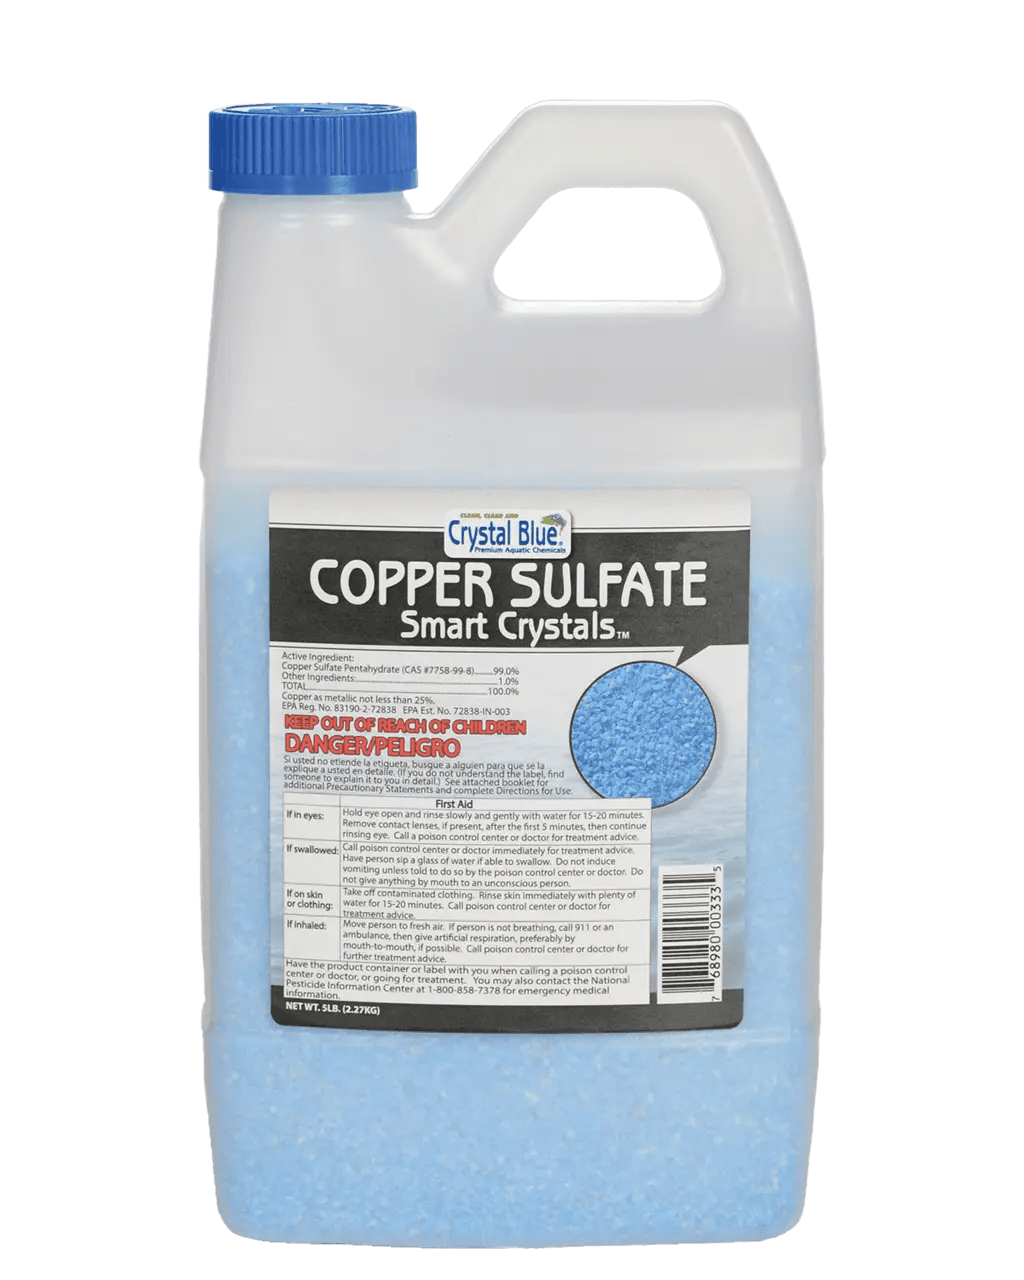 Sanco Chemical Algaecide Copper Sulfate Smart Crystals 5 lb Copper Sulfate Smart Crystals - Eliminate Filamentous Algae Effectively